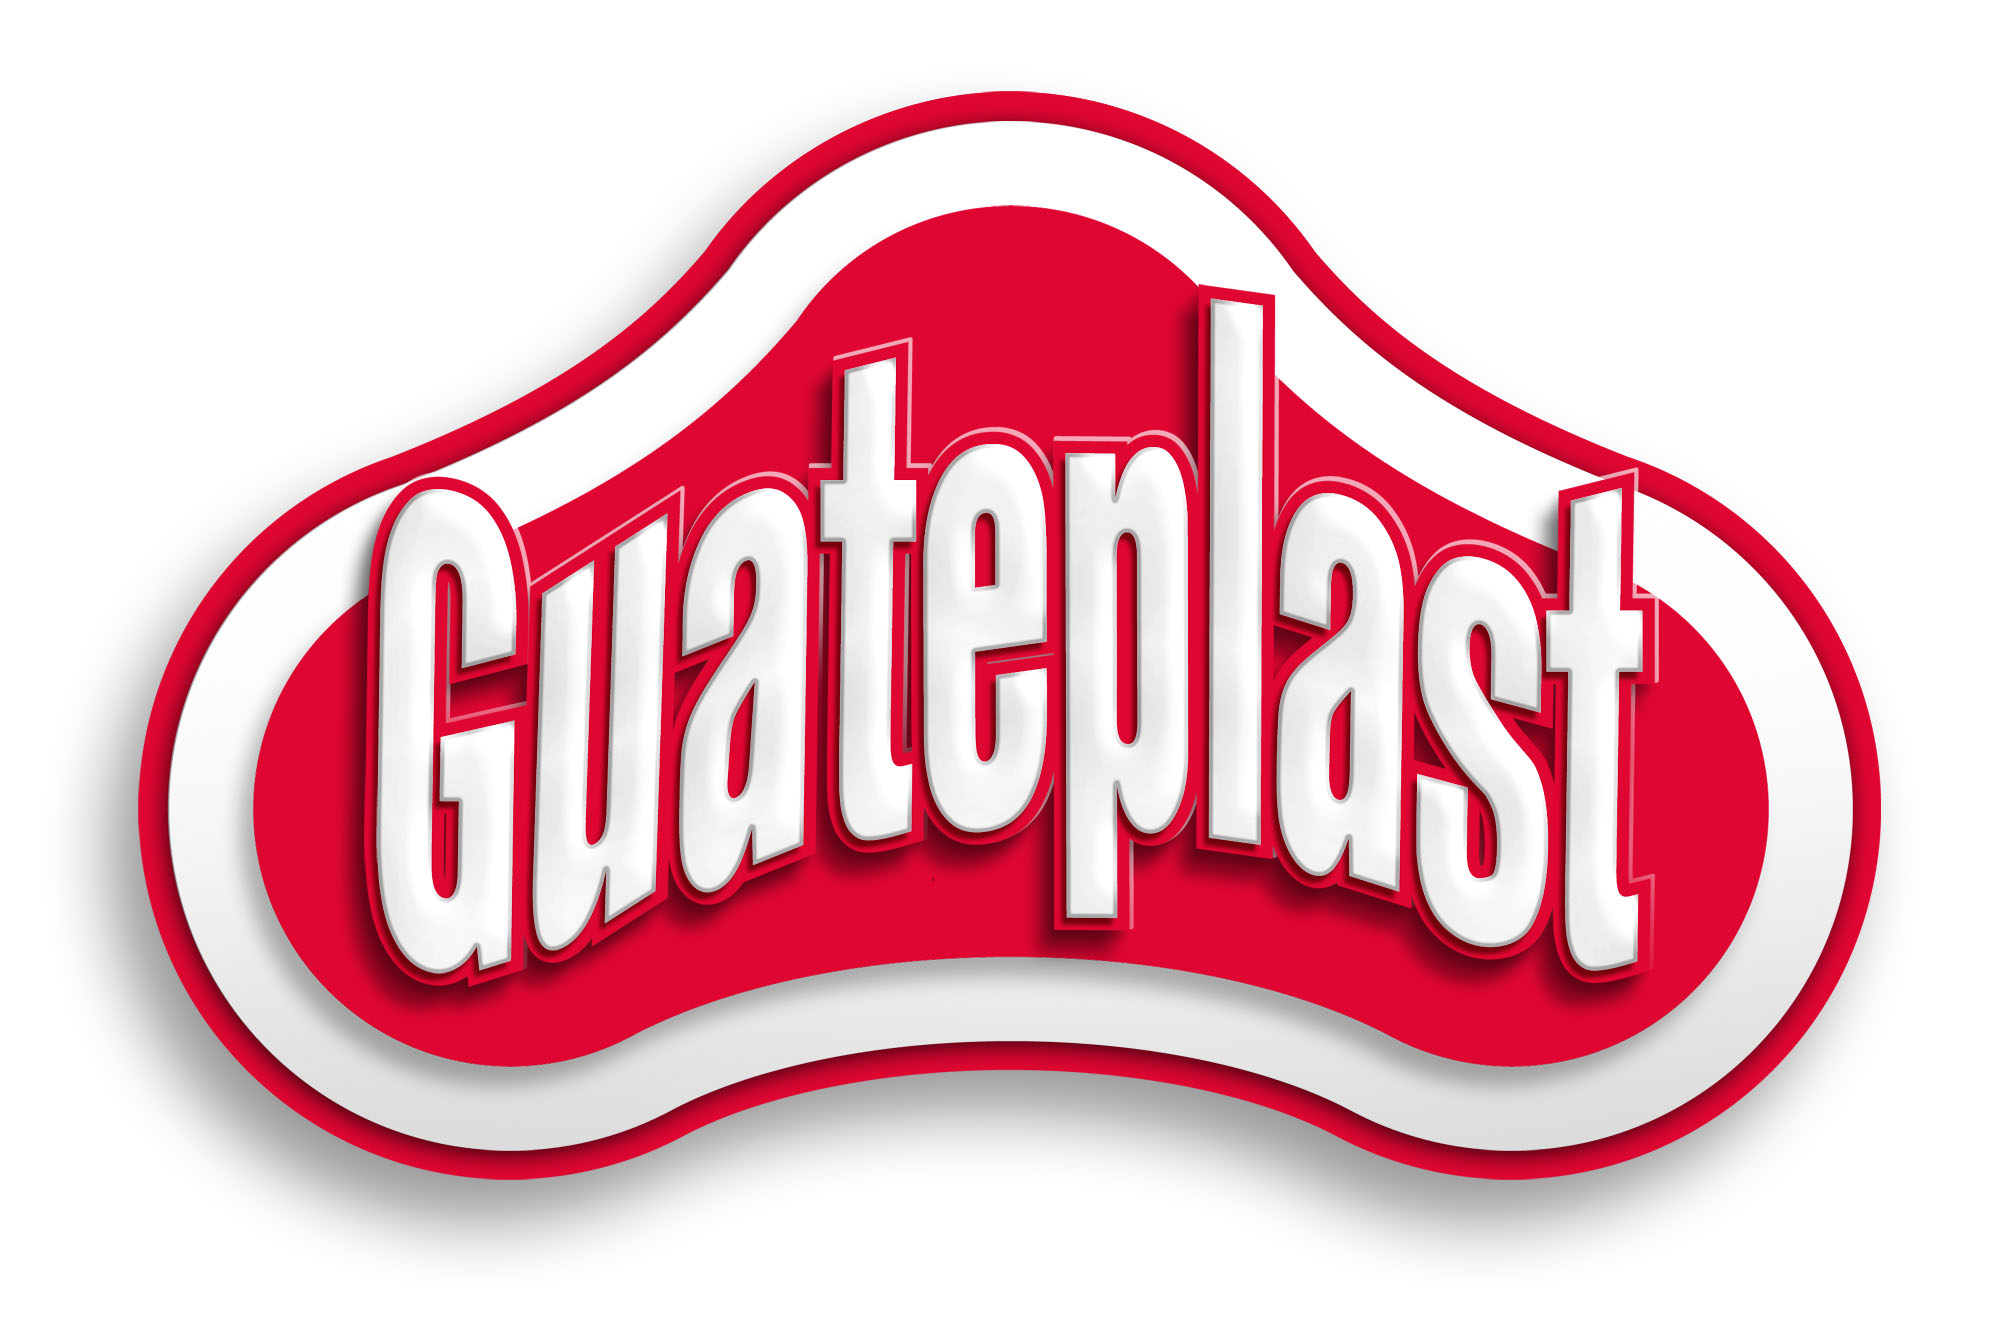 LogoGuateplast2013.jpg